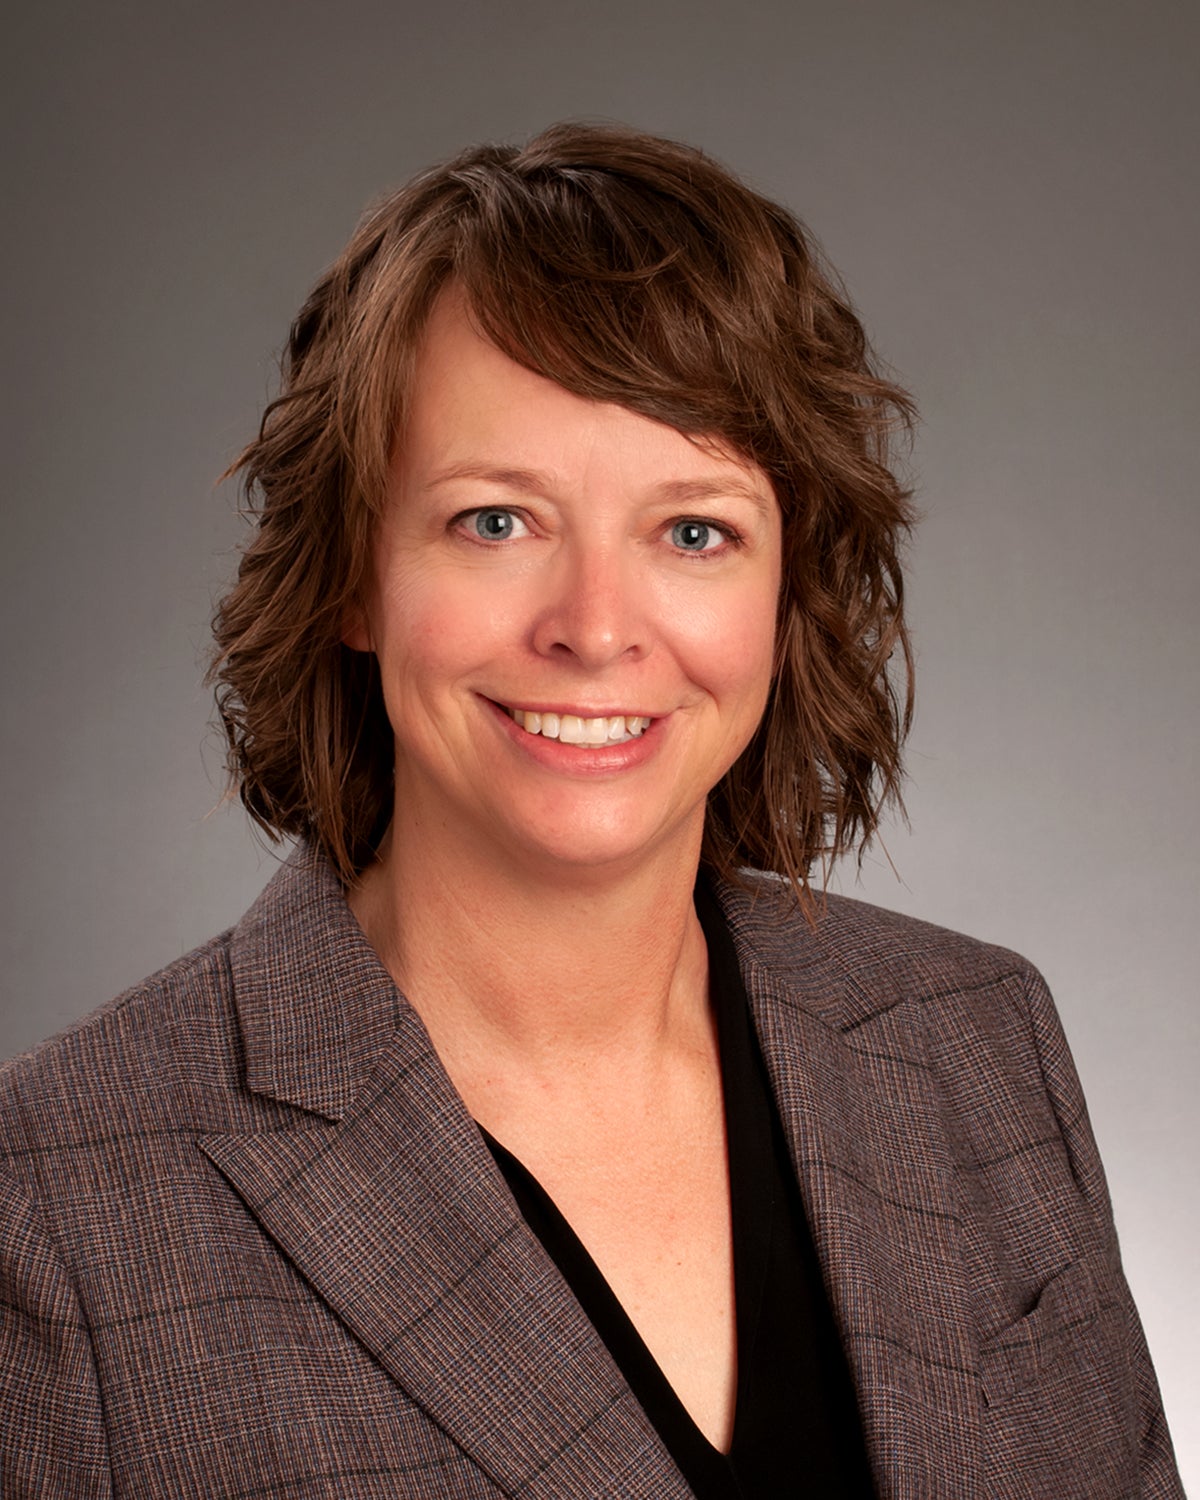 Manda Hicks, director of the Boise State speech and debate team